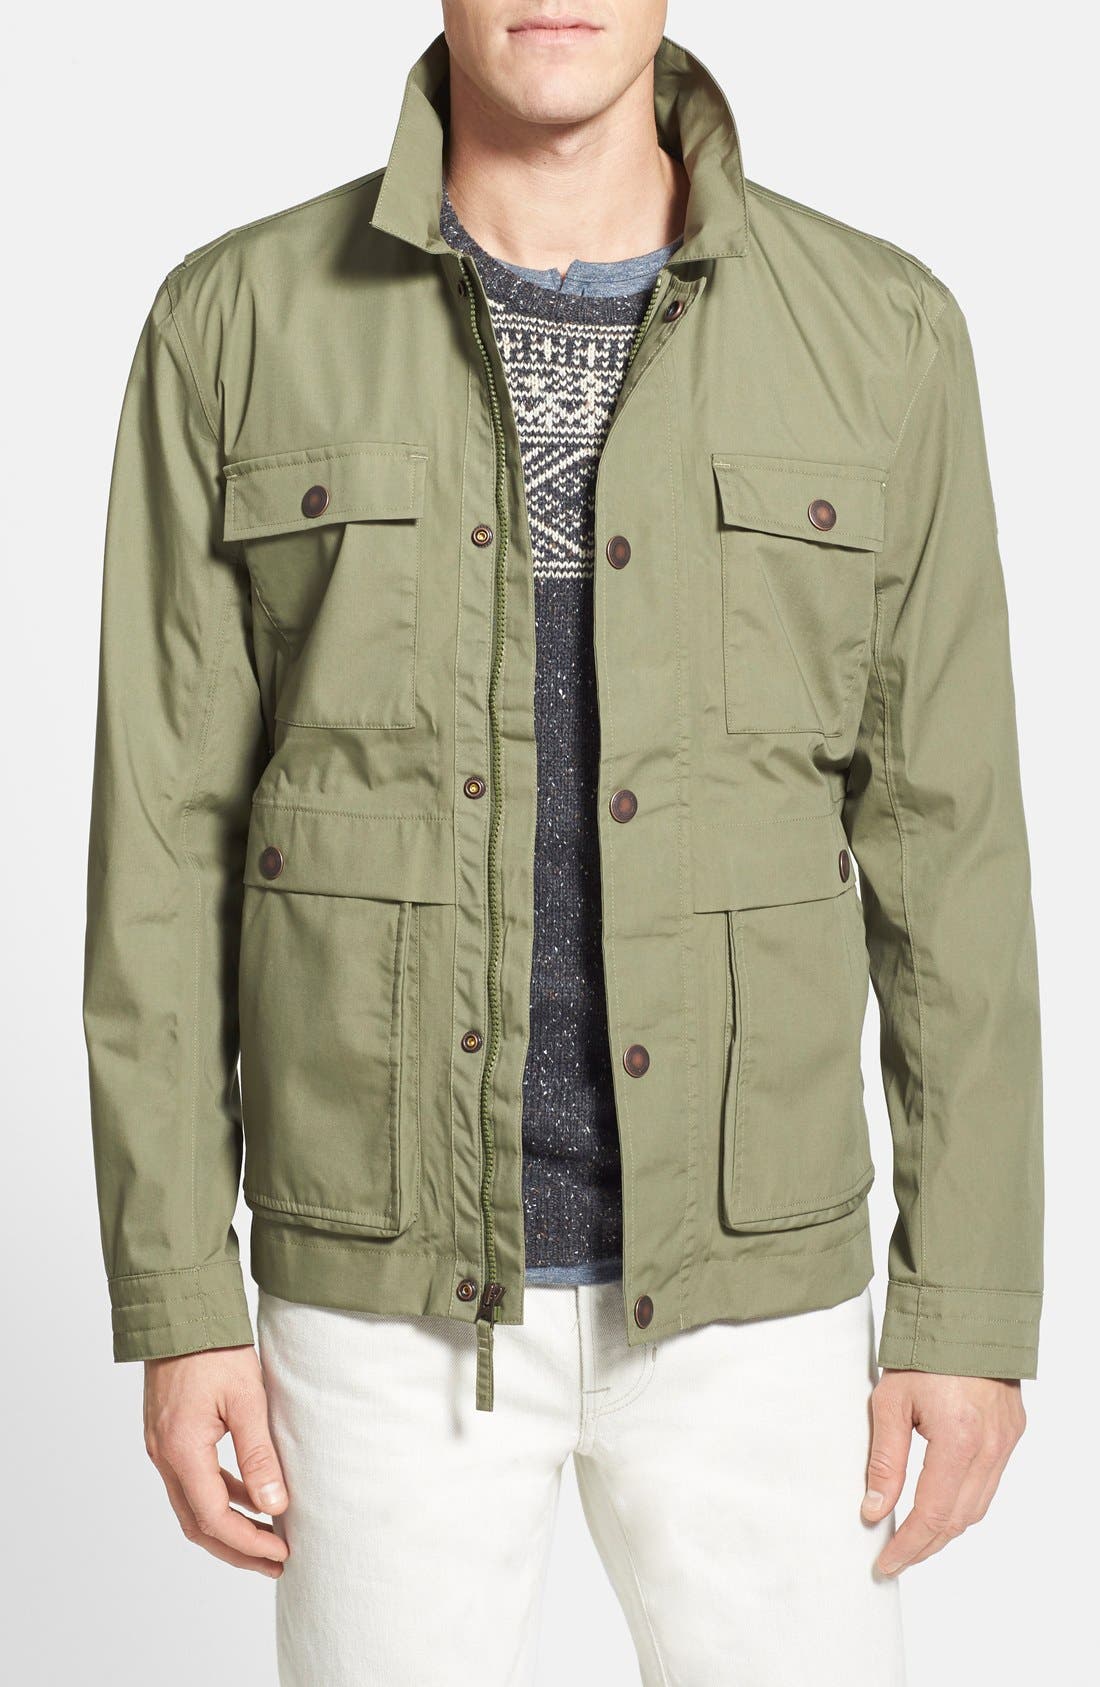 timberland hyvent jacket